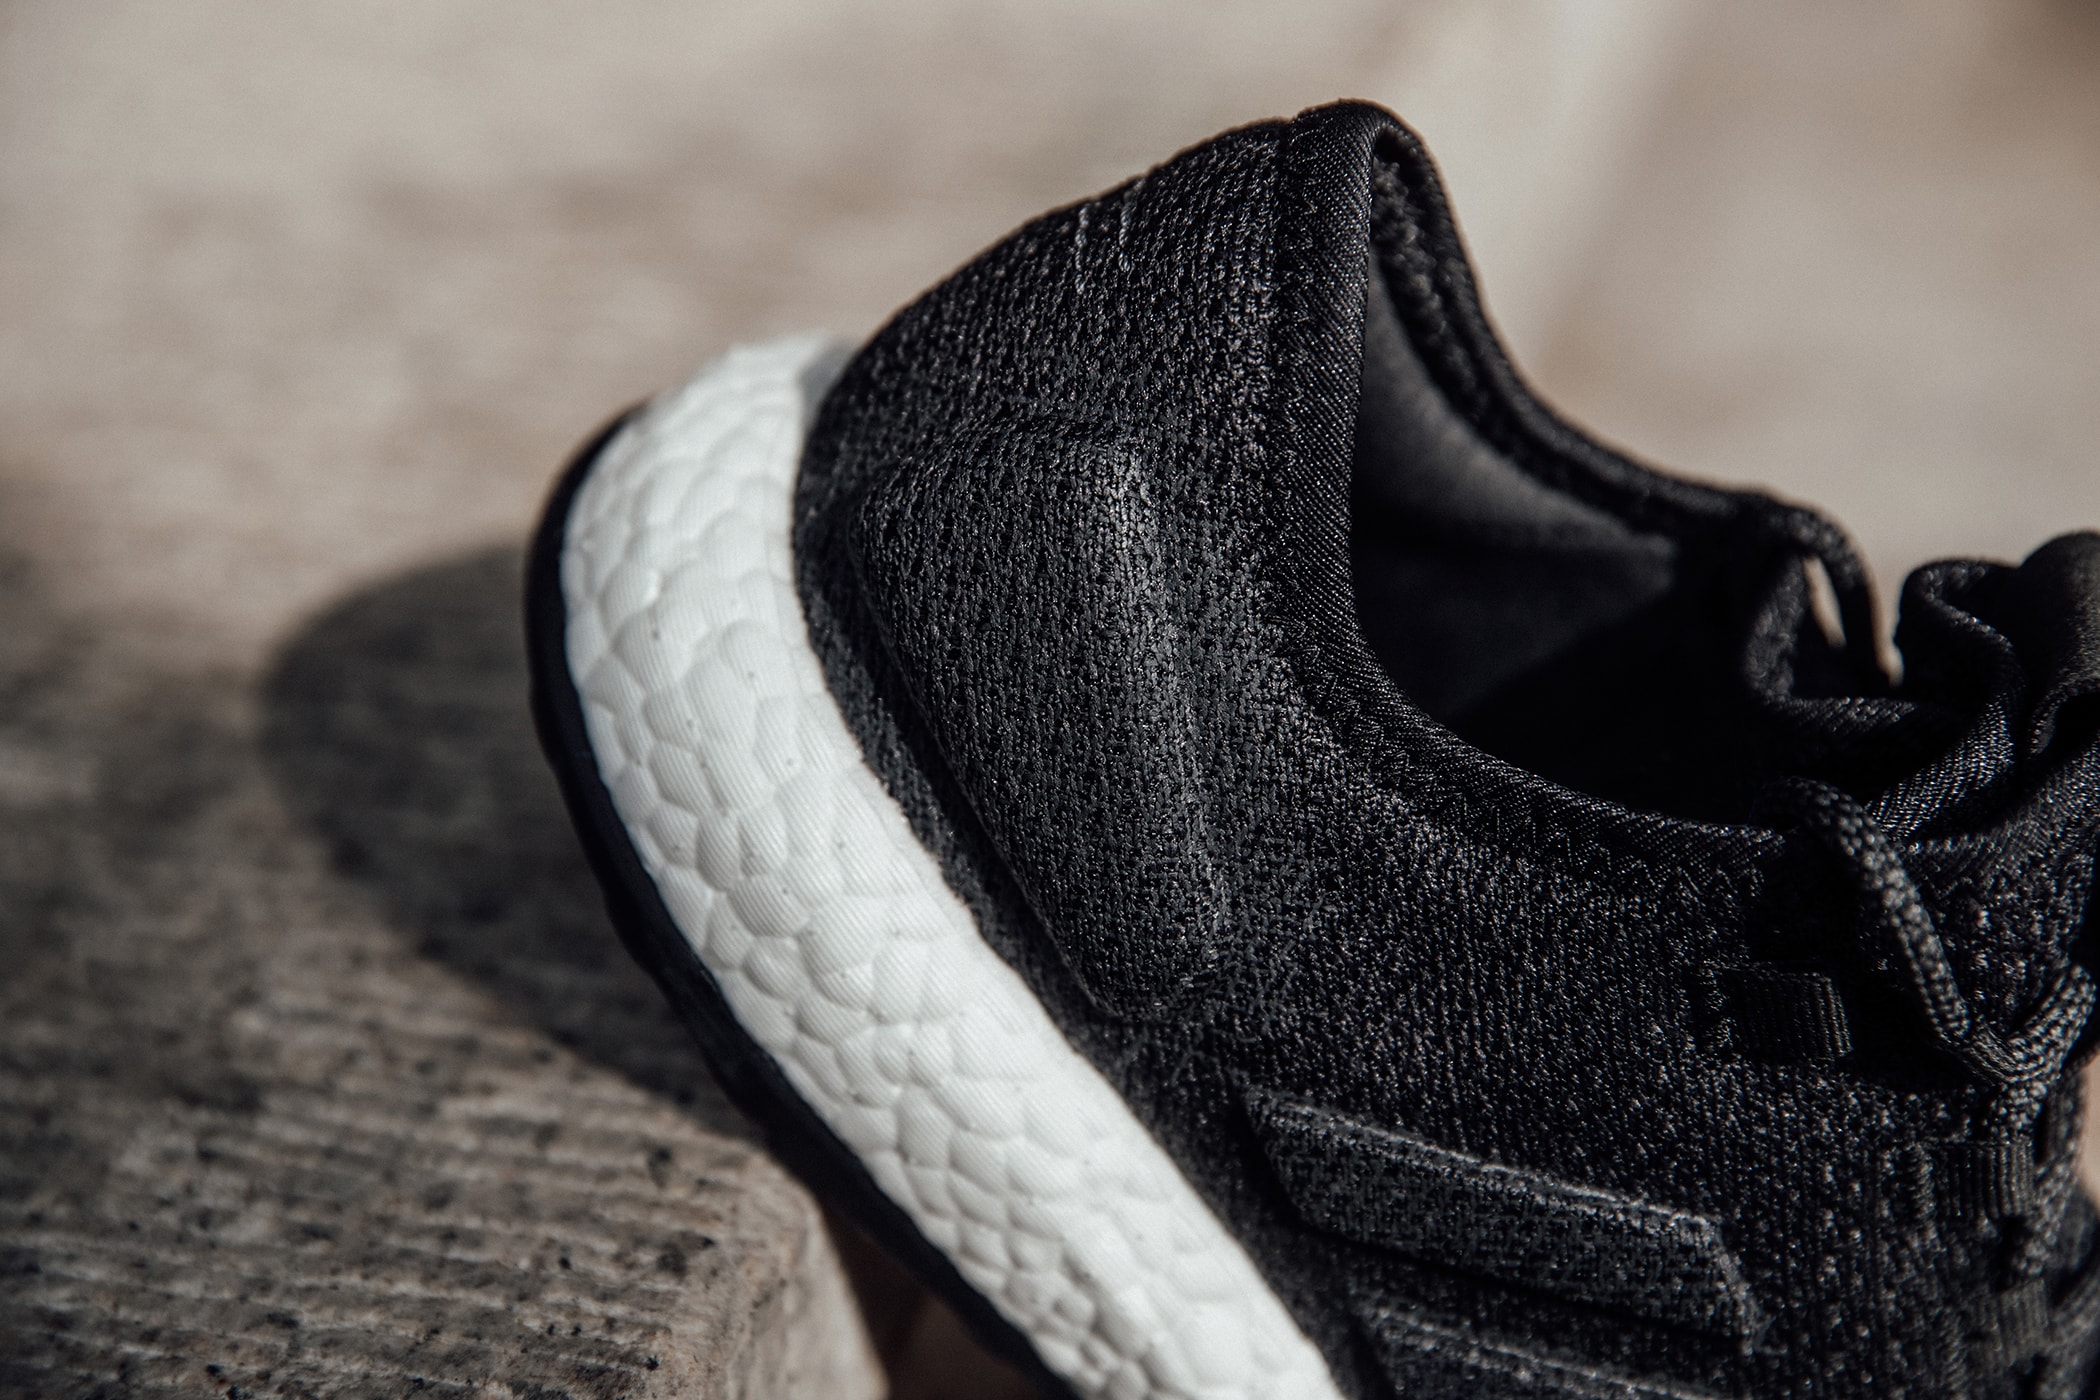 adidas 2019 新款 PureBOOST 跑鞋正式上架